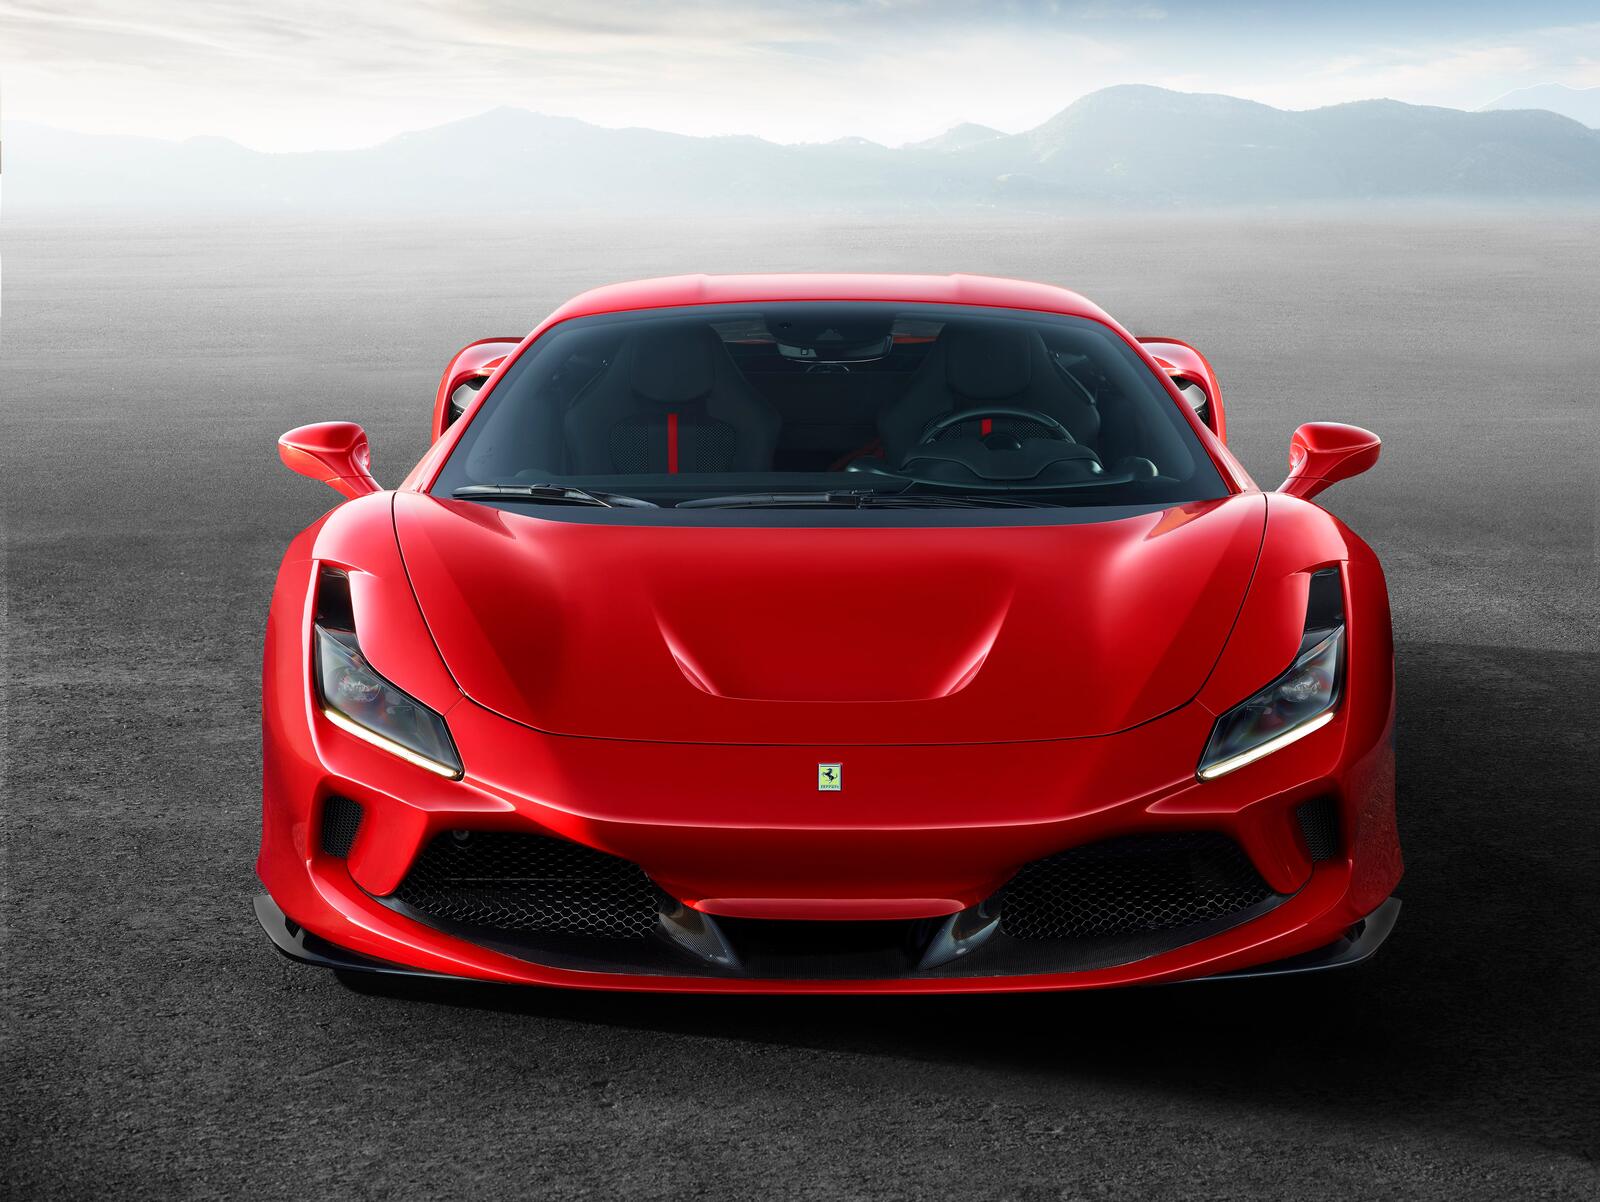 Wallpapers Ferrari F8 Tributo cars cars 2020 year on the desktop